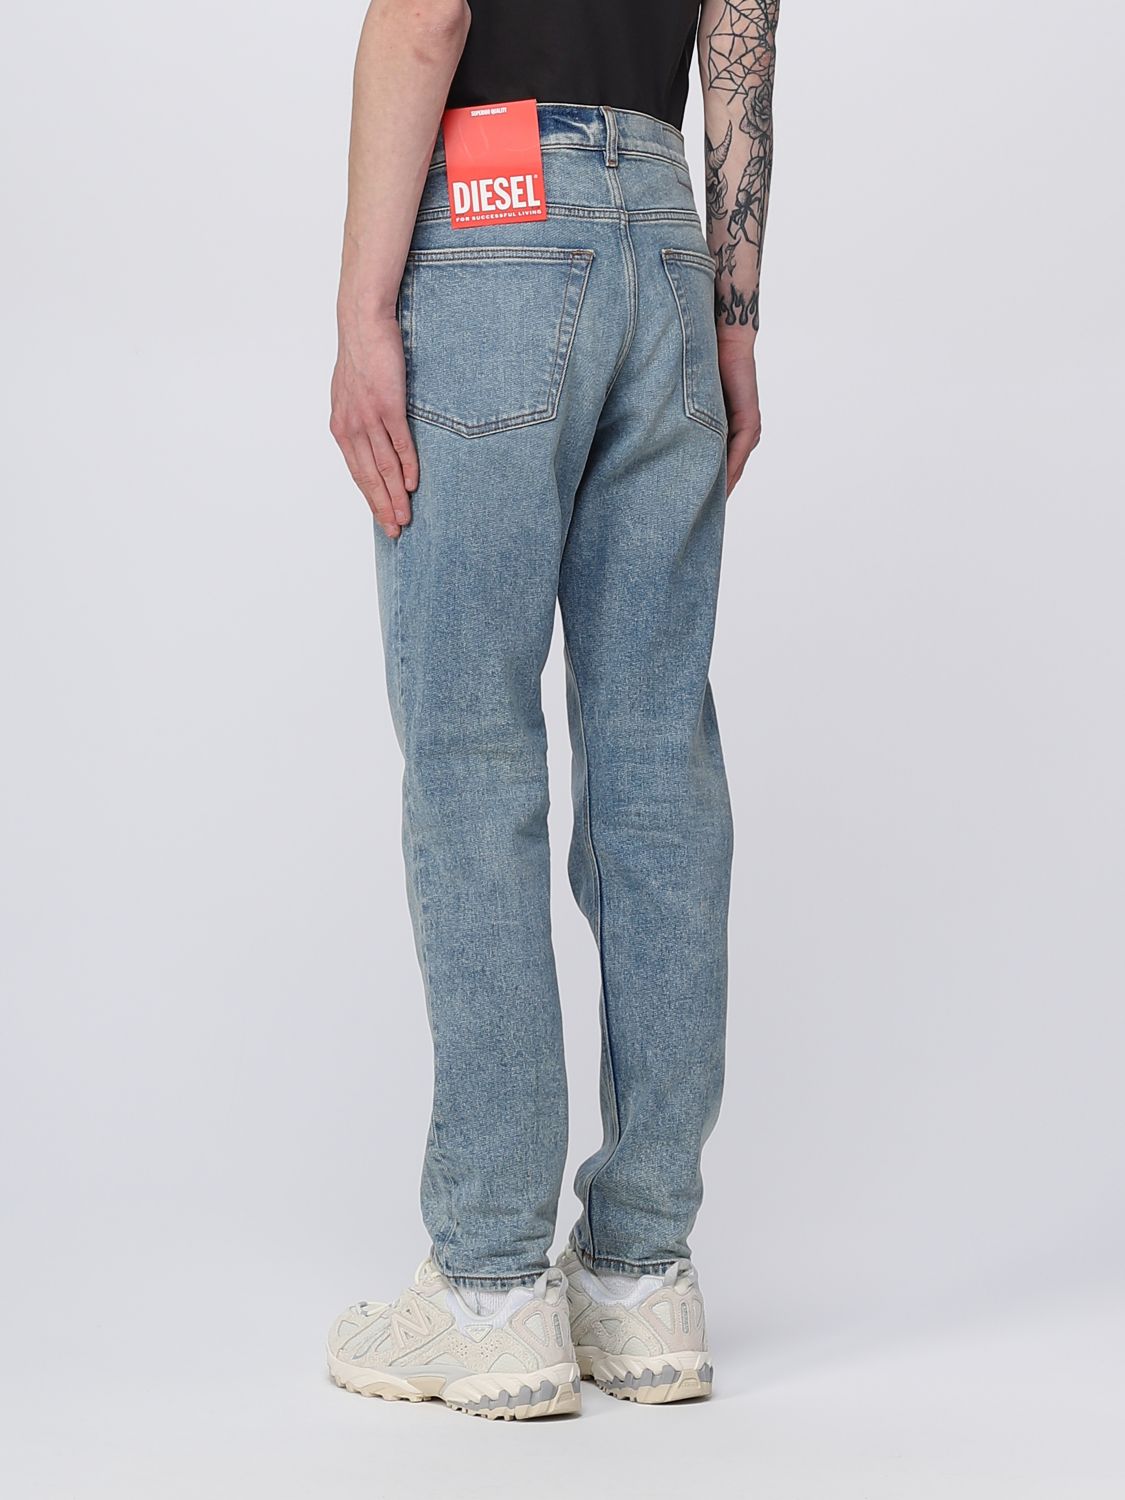 DIESEL: jeans for - Denim | Diesel jeans online on GIGLIO.COM